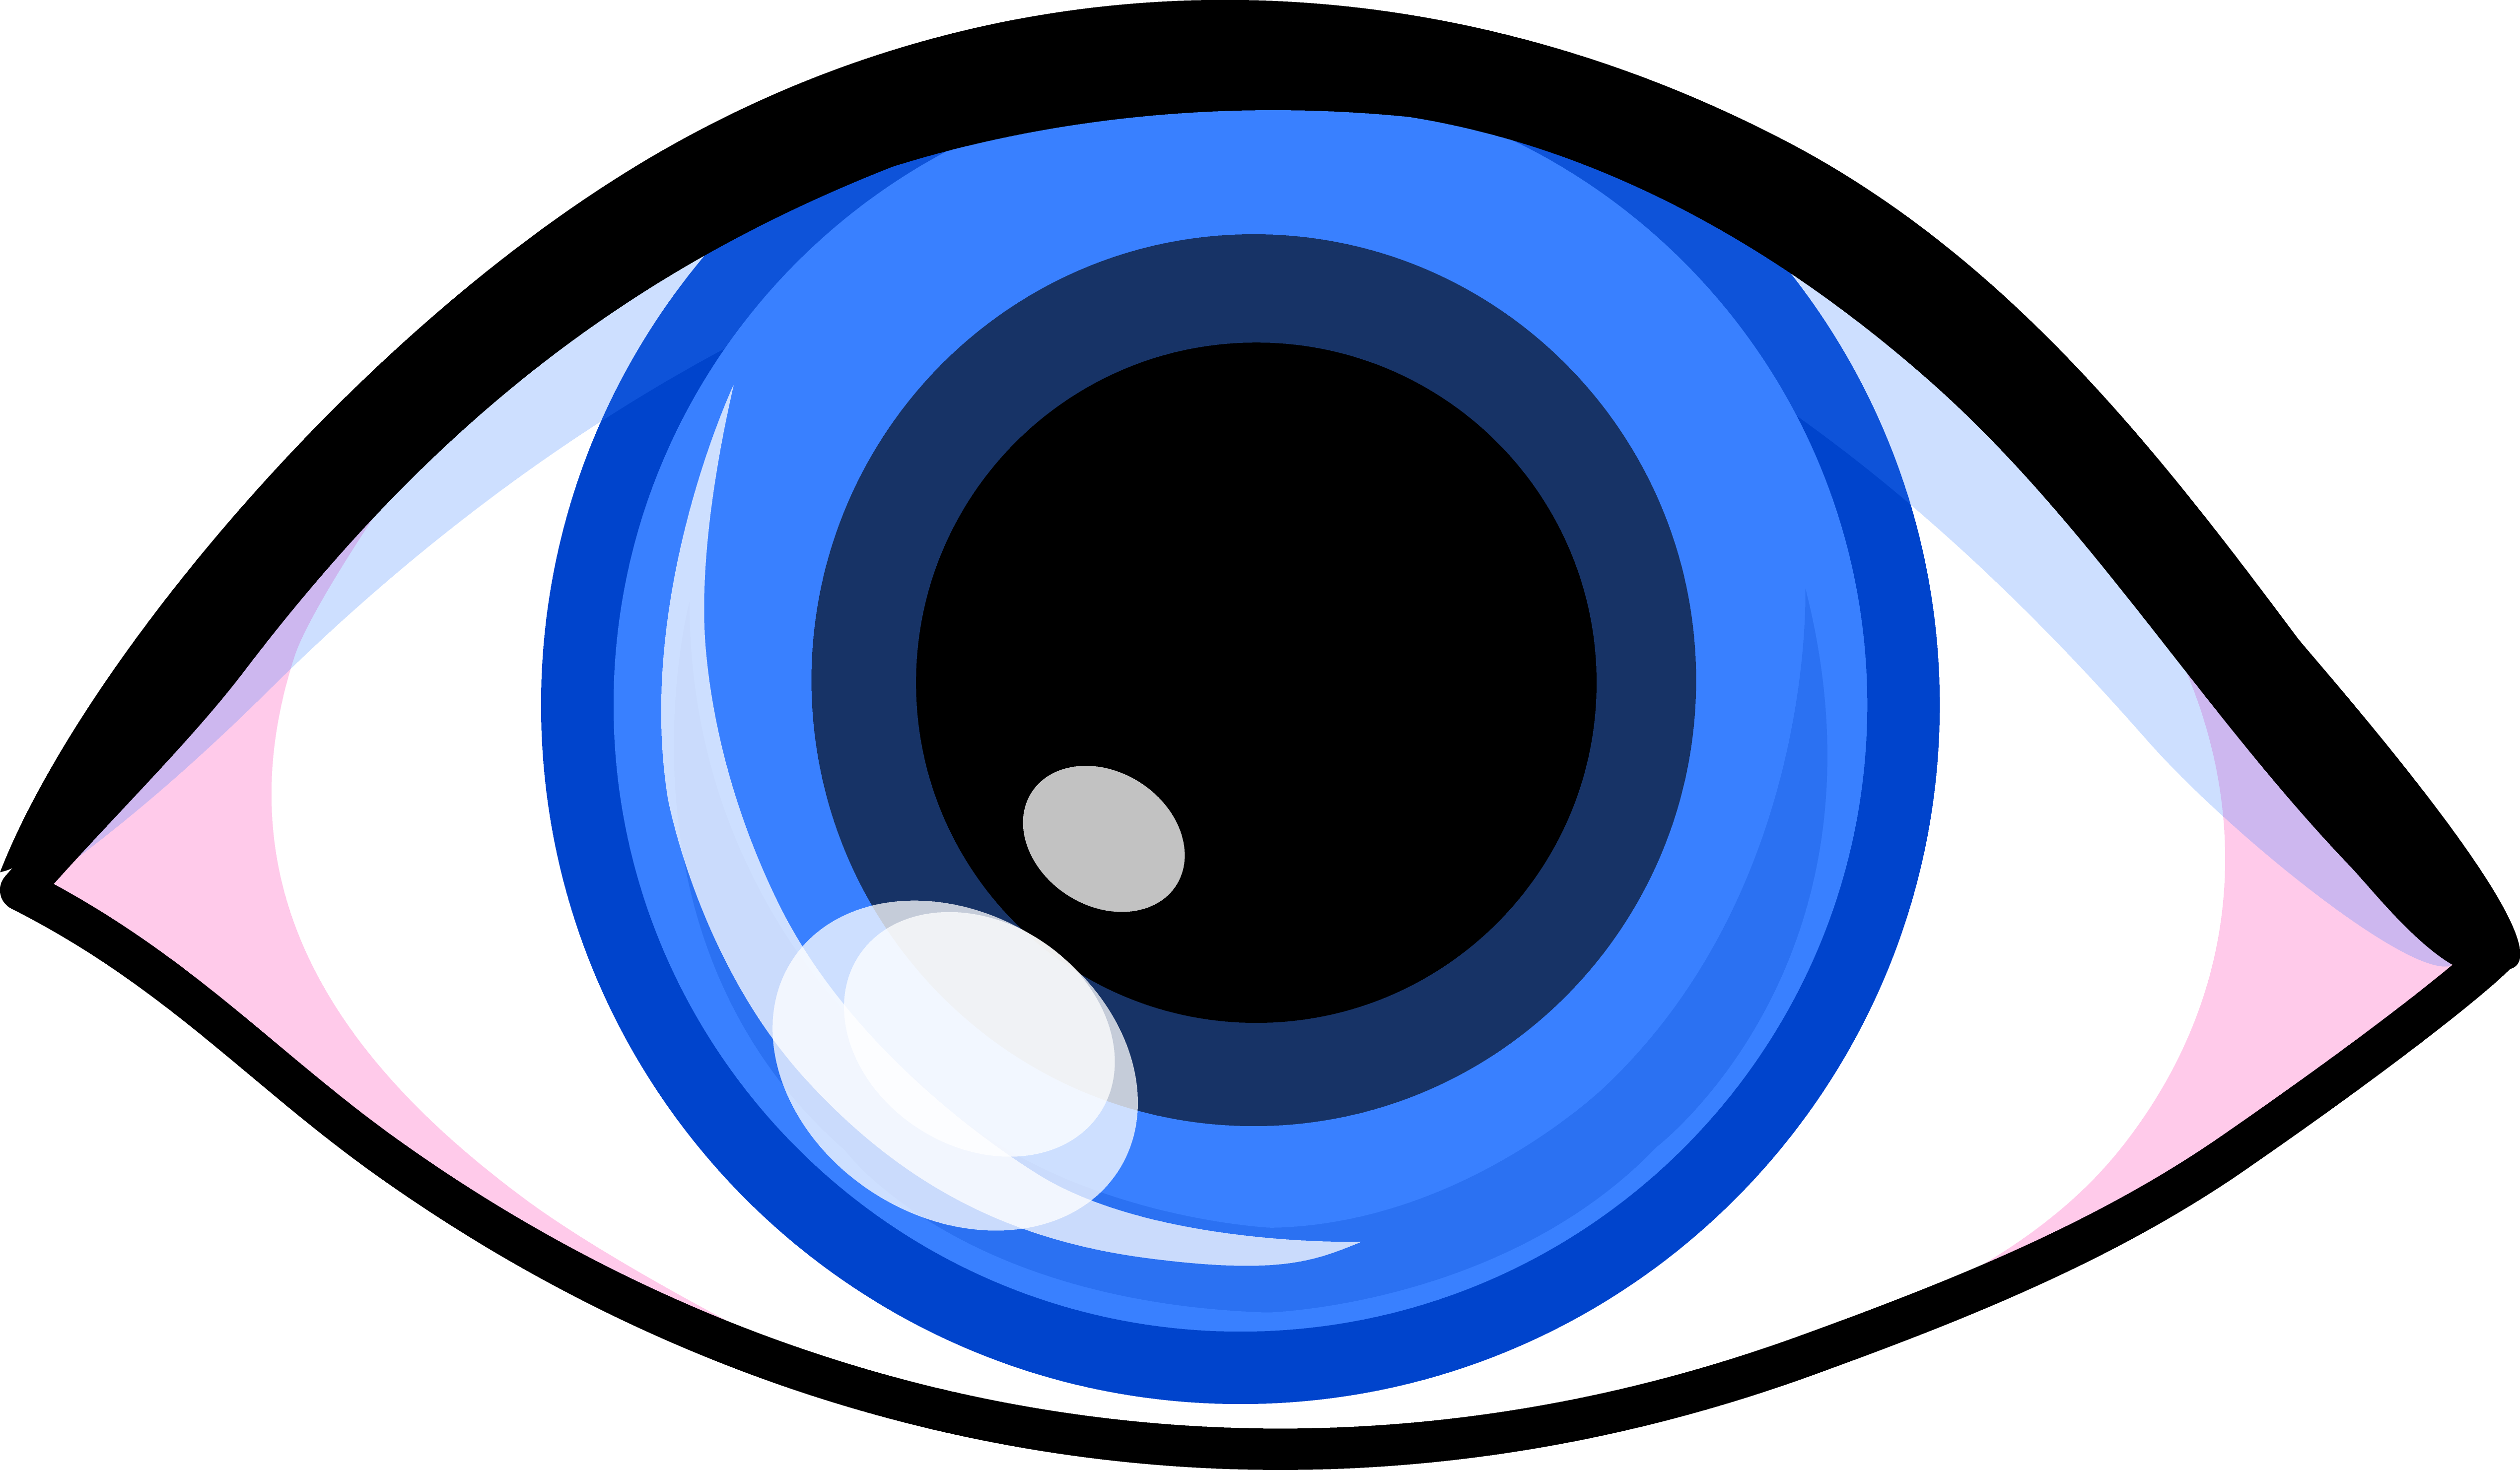 Free Cartoon Eyeball Images, Download Free Cartoon Eyeball Images png